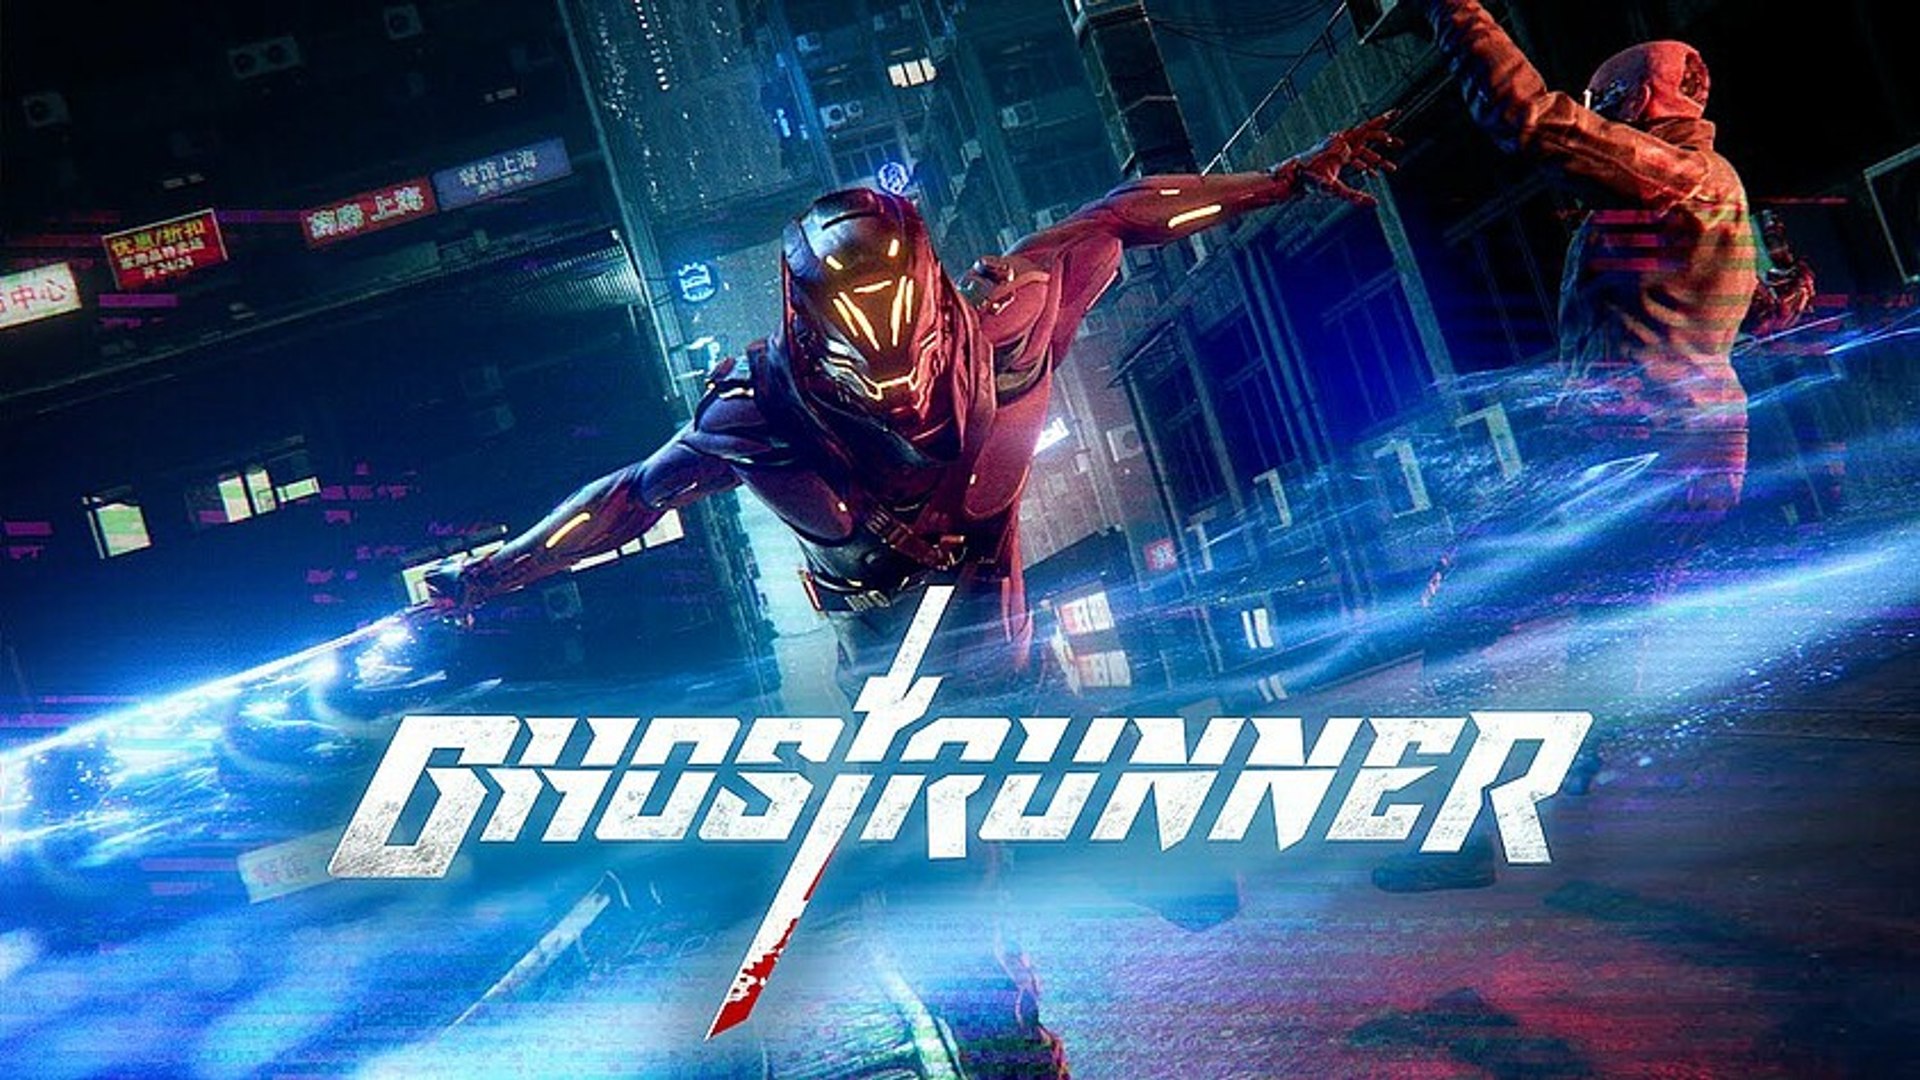 Ghostrunner 4K Gaming Wallpaper, HD Games 4K Wallpapers, Images